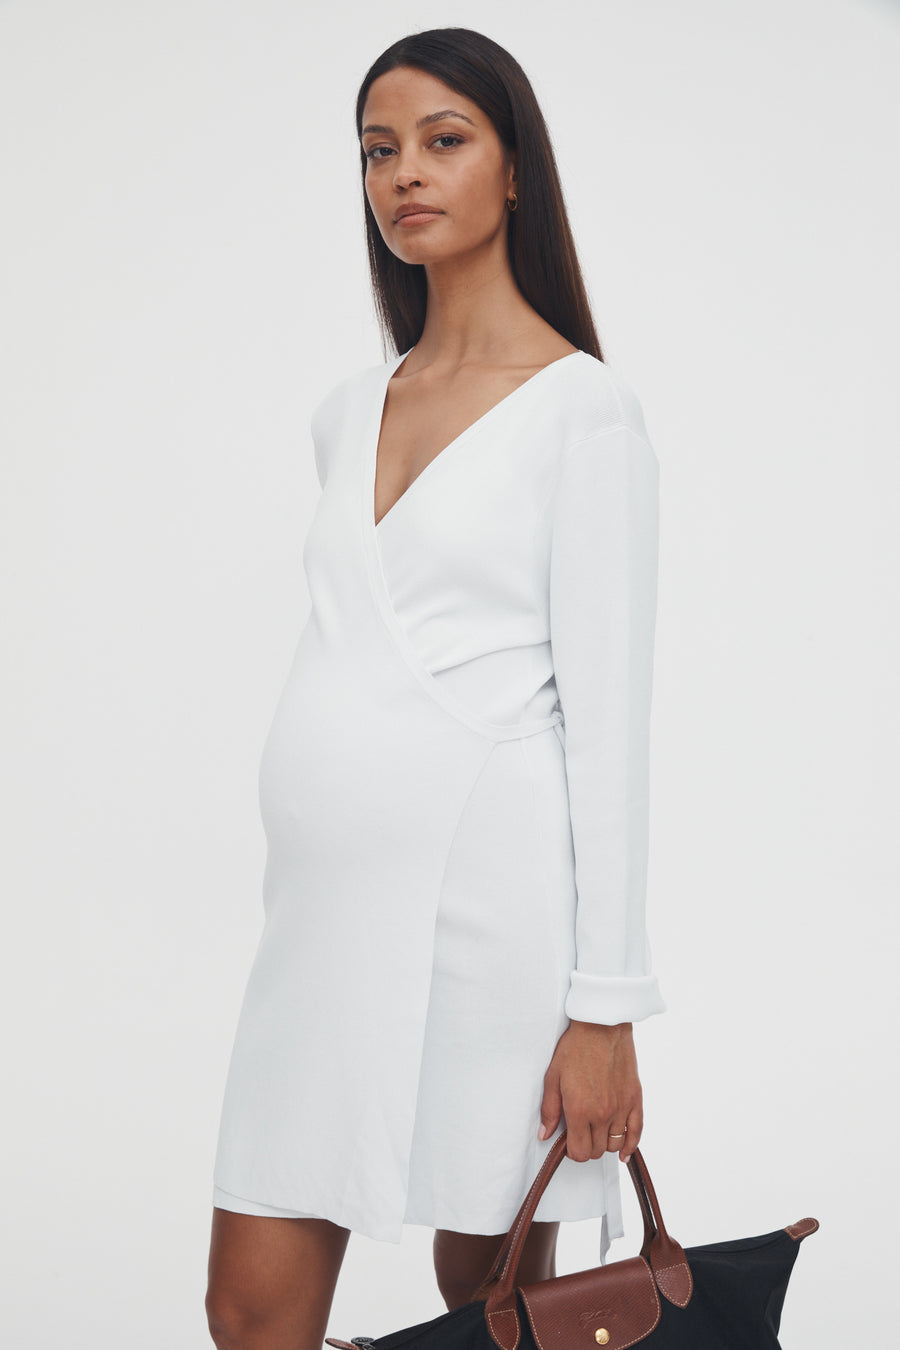 Luxury Maternity Wrap Dress (White) 3